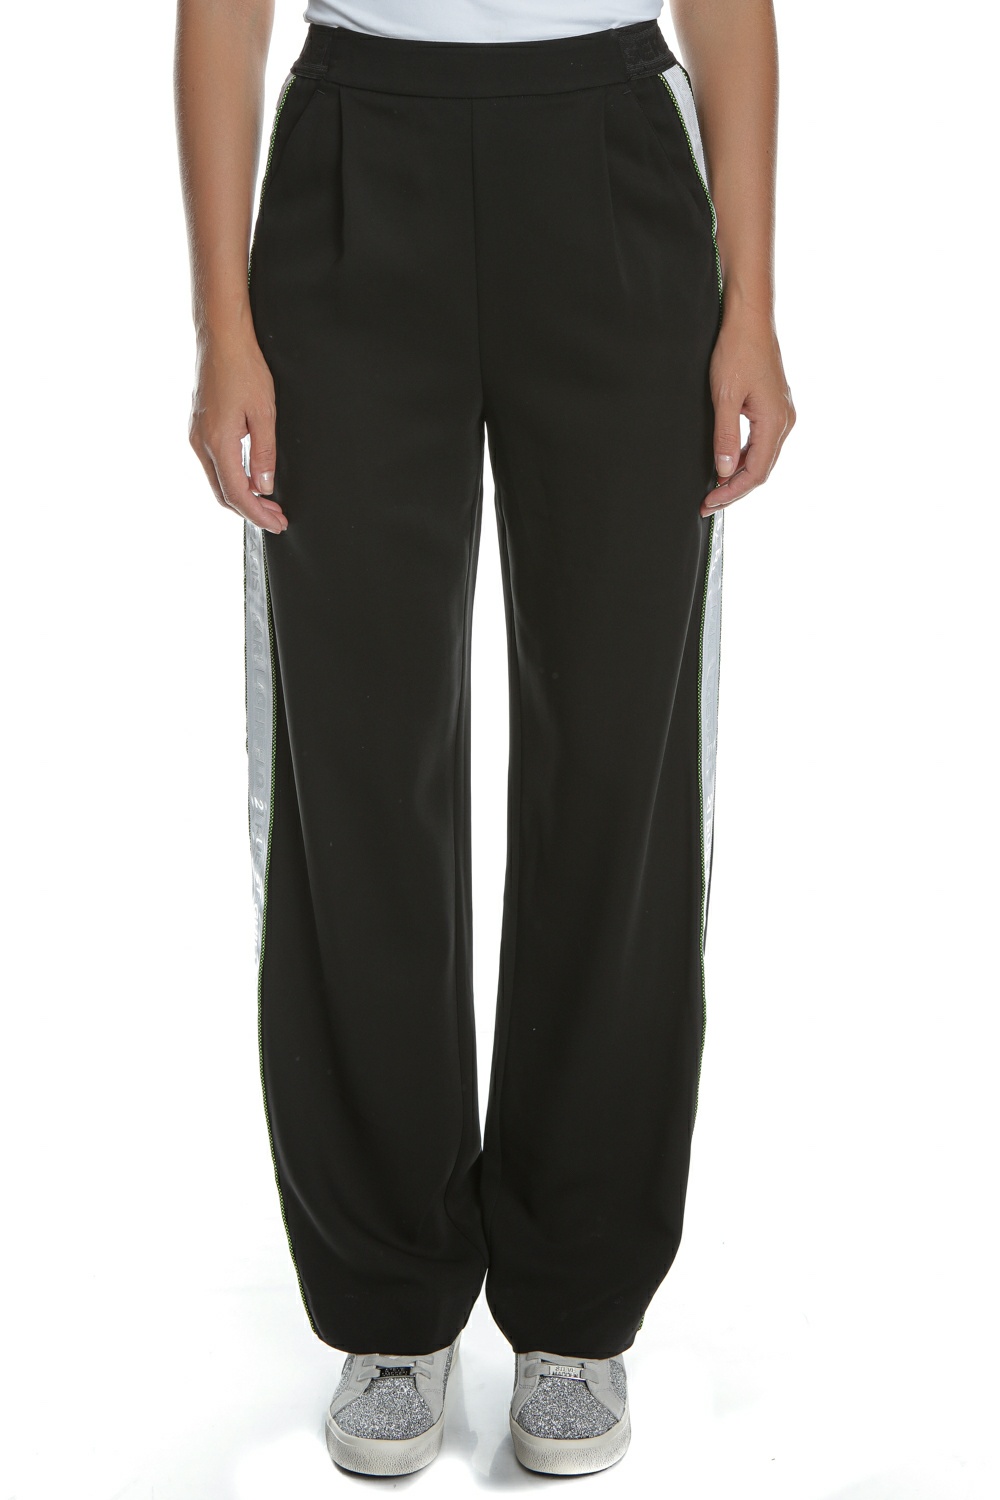 KARL LAGERFELD – Γυναικείο παντελόνι KARL LAGERFELD Cady Pants W/ Logo Tape μαύρο 1794835.0-7171